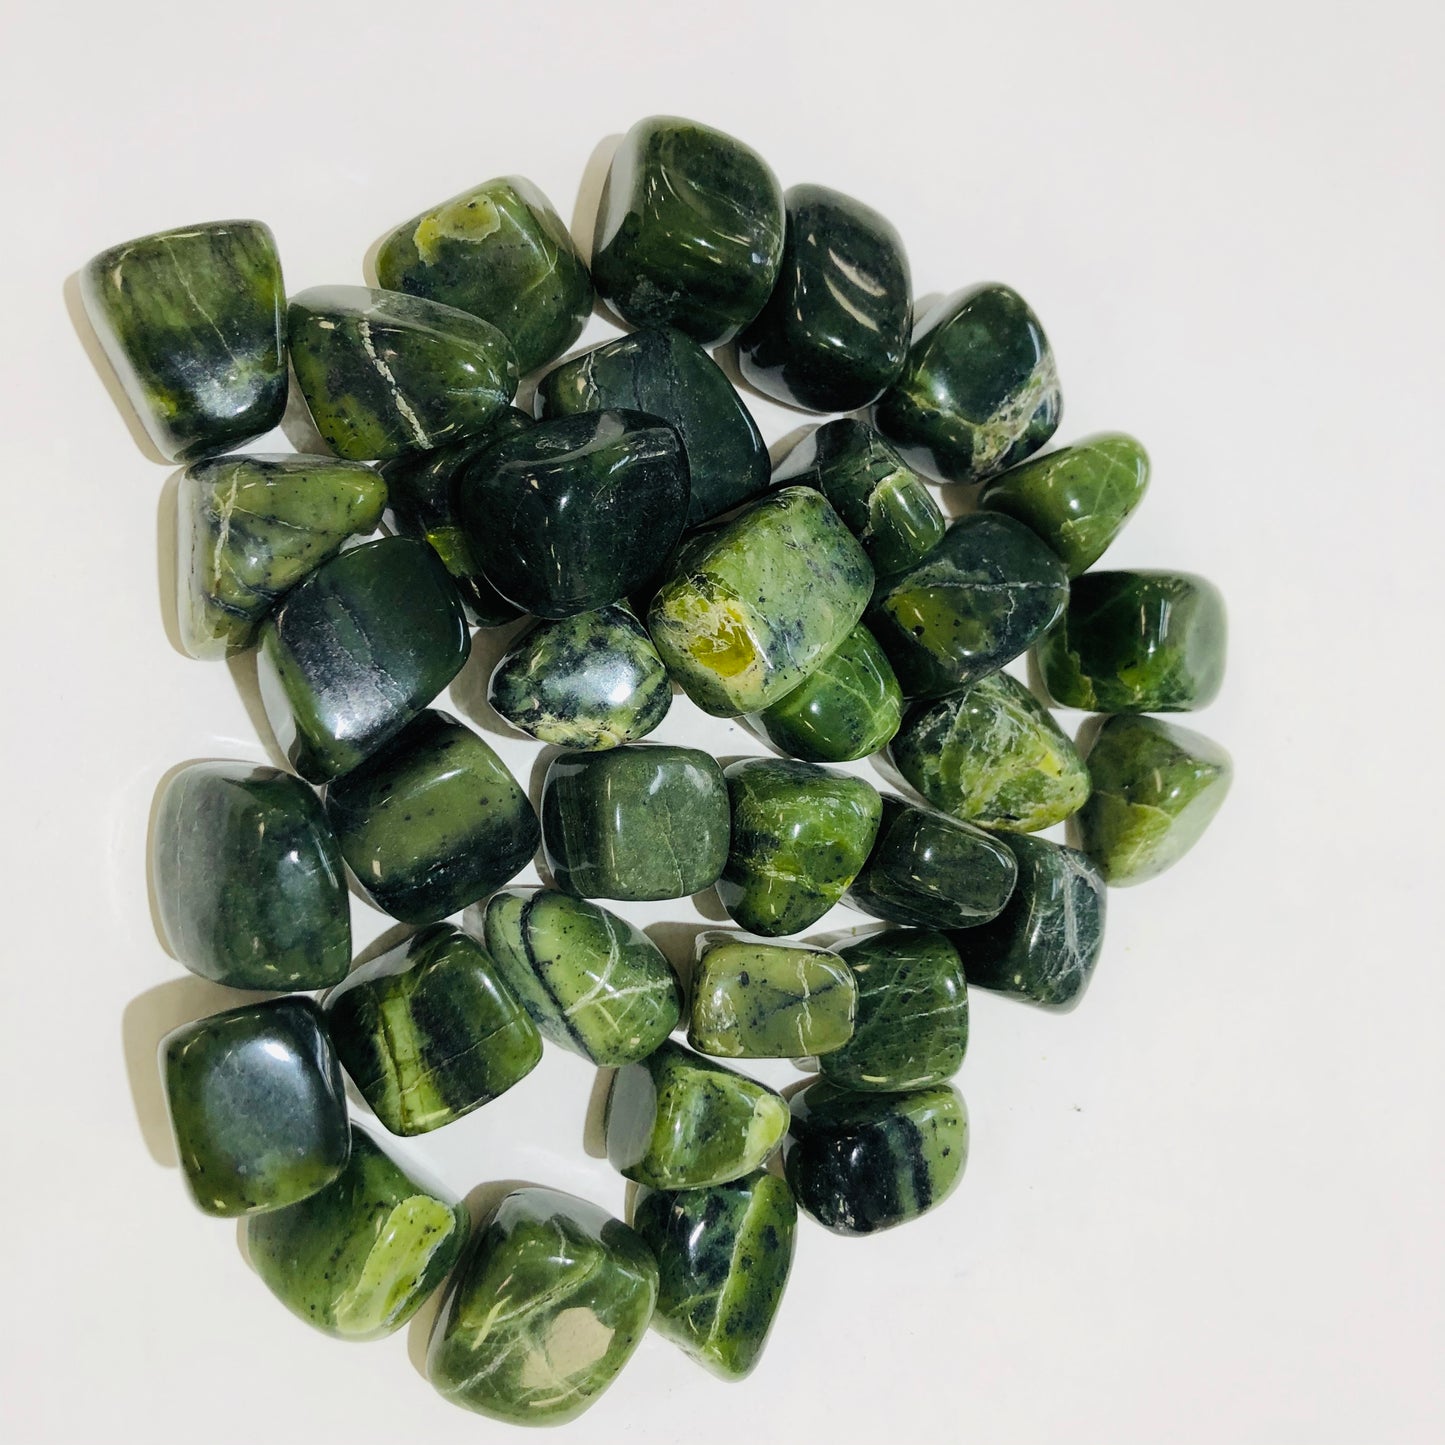 Jade - Nephrite